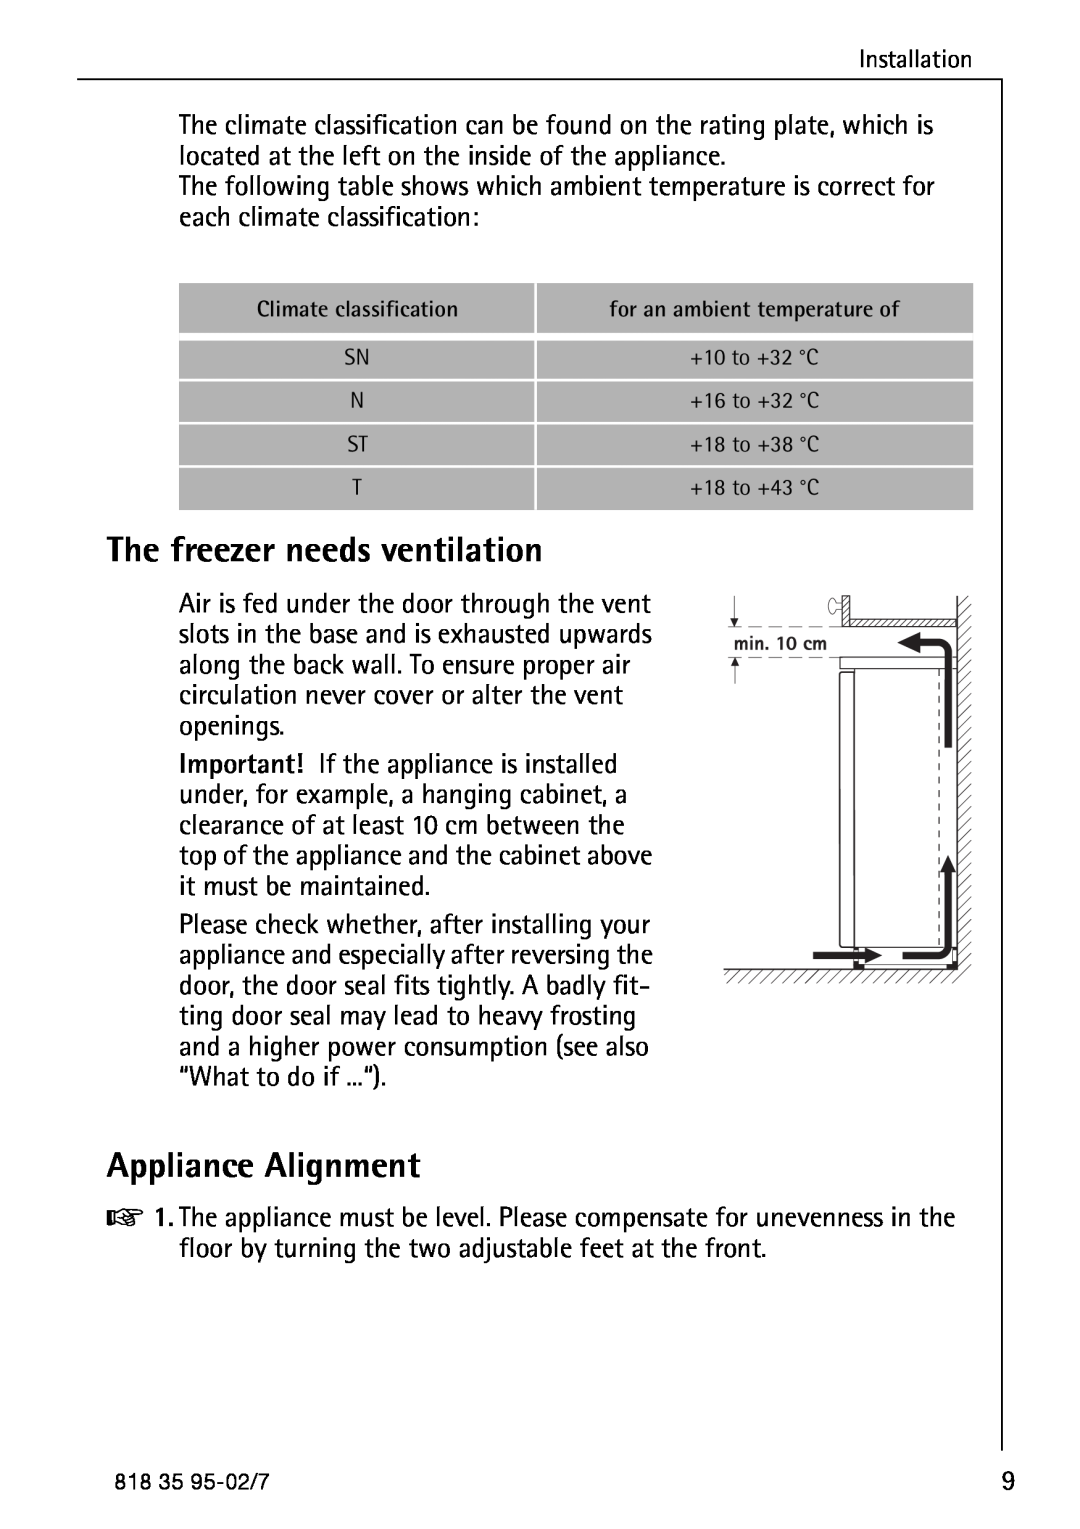 AEG 75248 GA3 manual The freezer needs ventilation, Appliance Alignment 